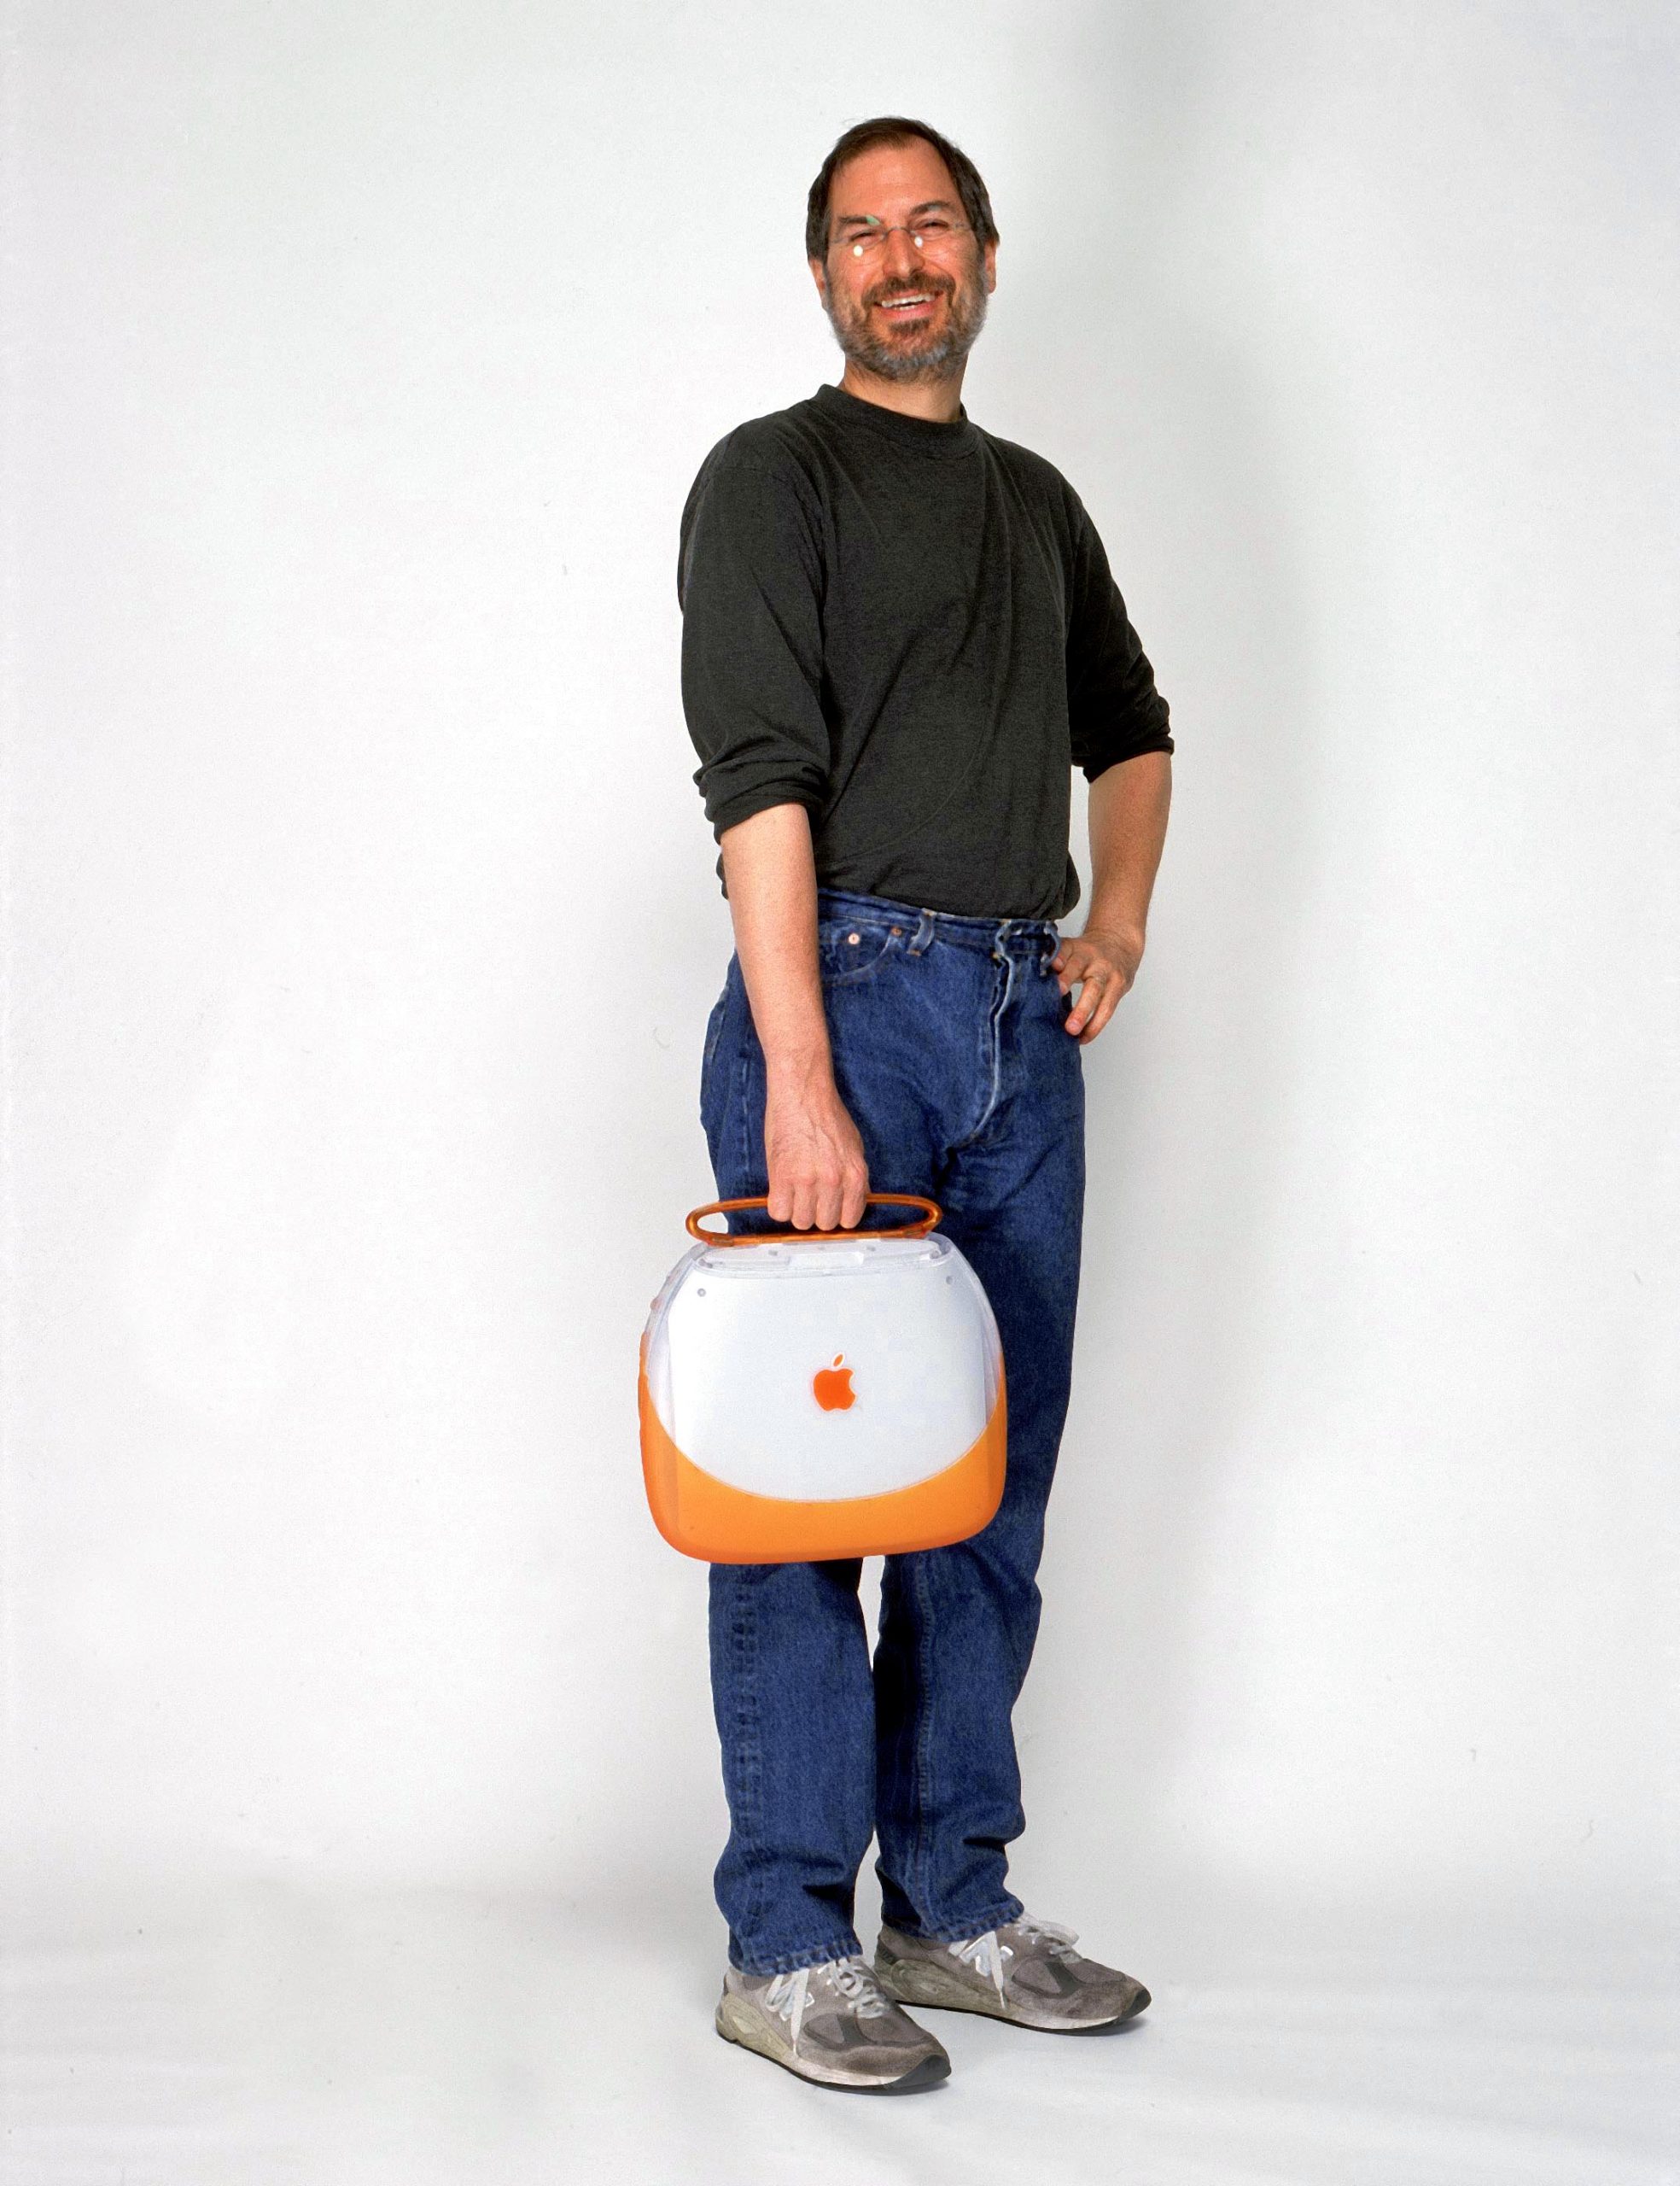 Steve Jobs con un iBook Tangerine